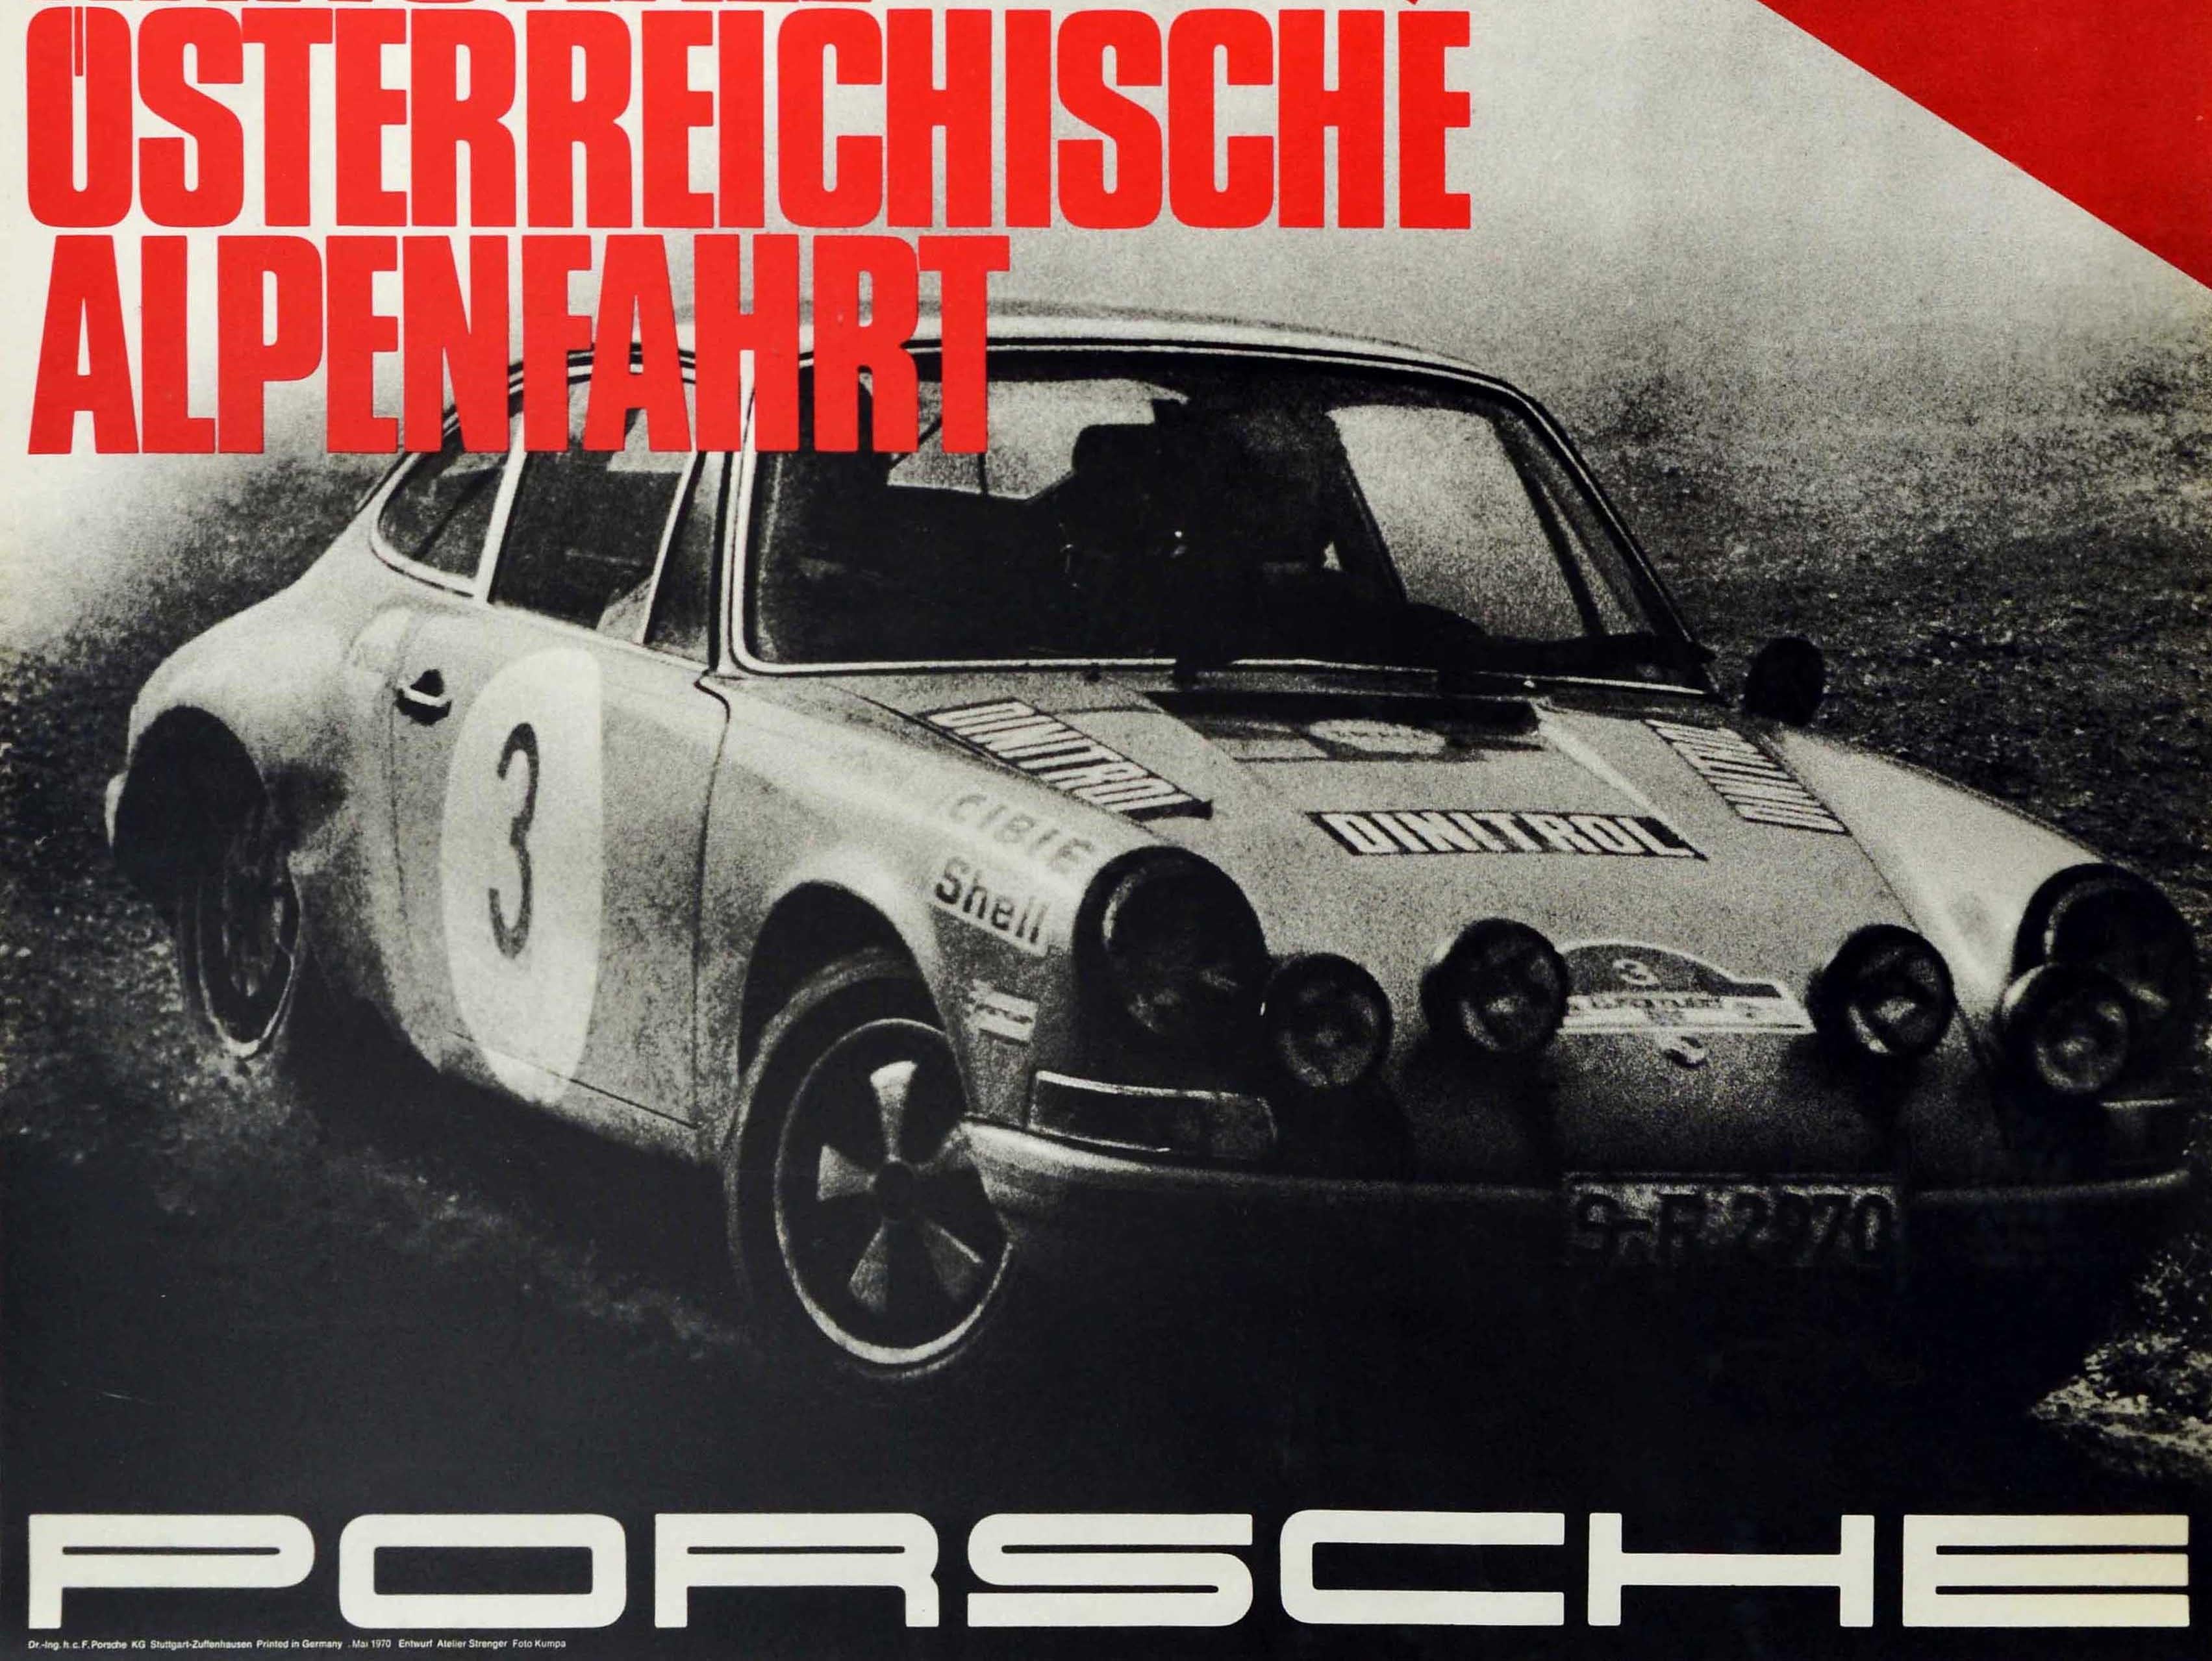 German Original Vintage Auto Racing Poster Porsche 911 Austrian Alpine Tour Alpenfahrt